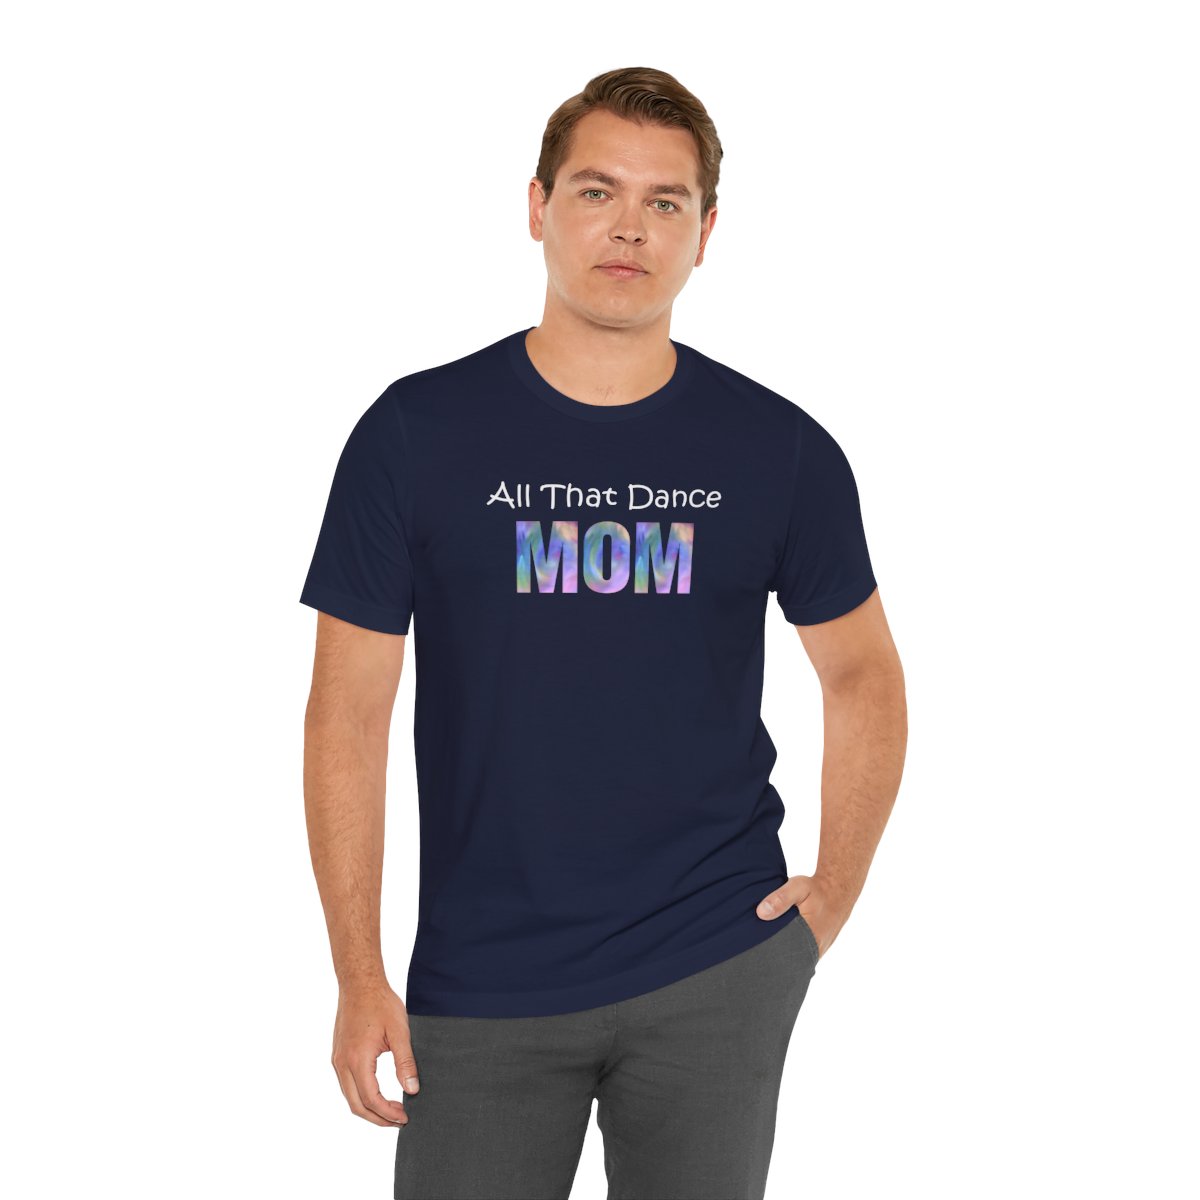 All That Dance Mom Tshirt product thumbnail image